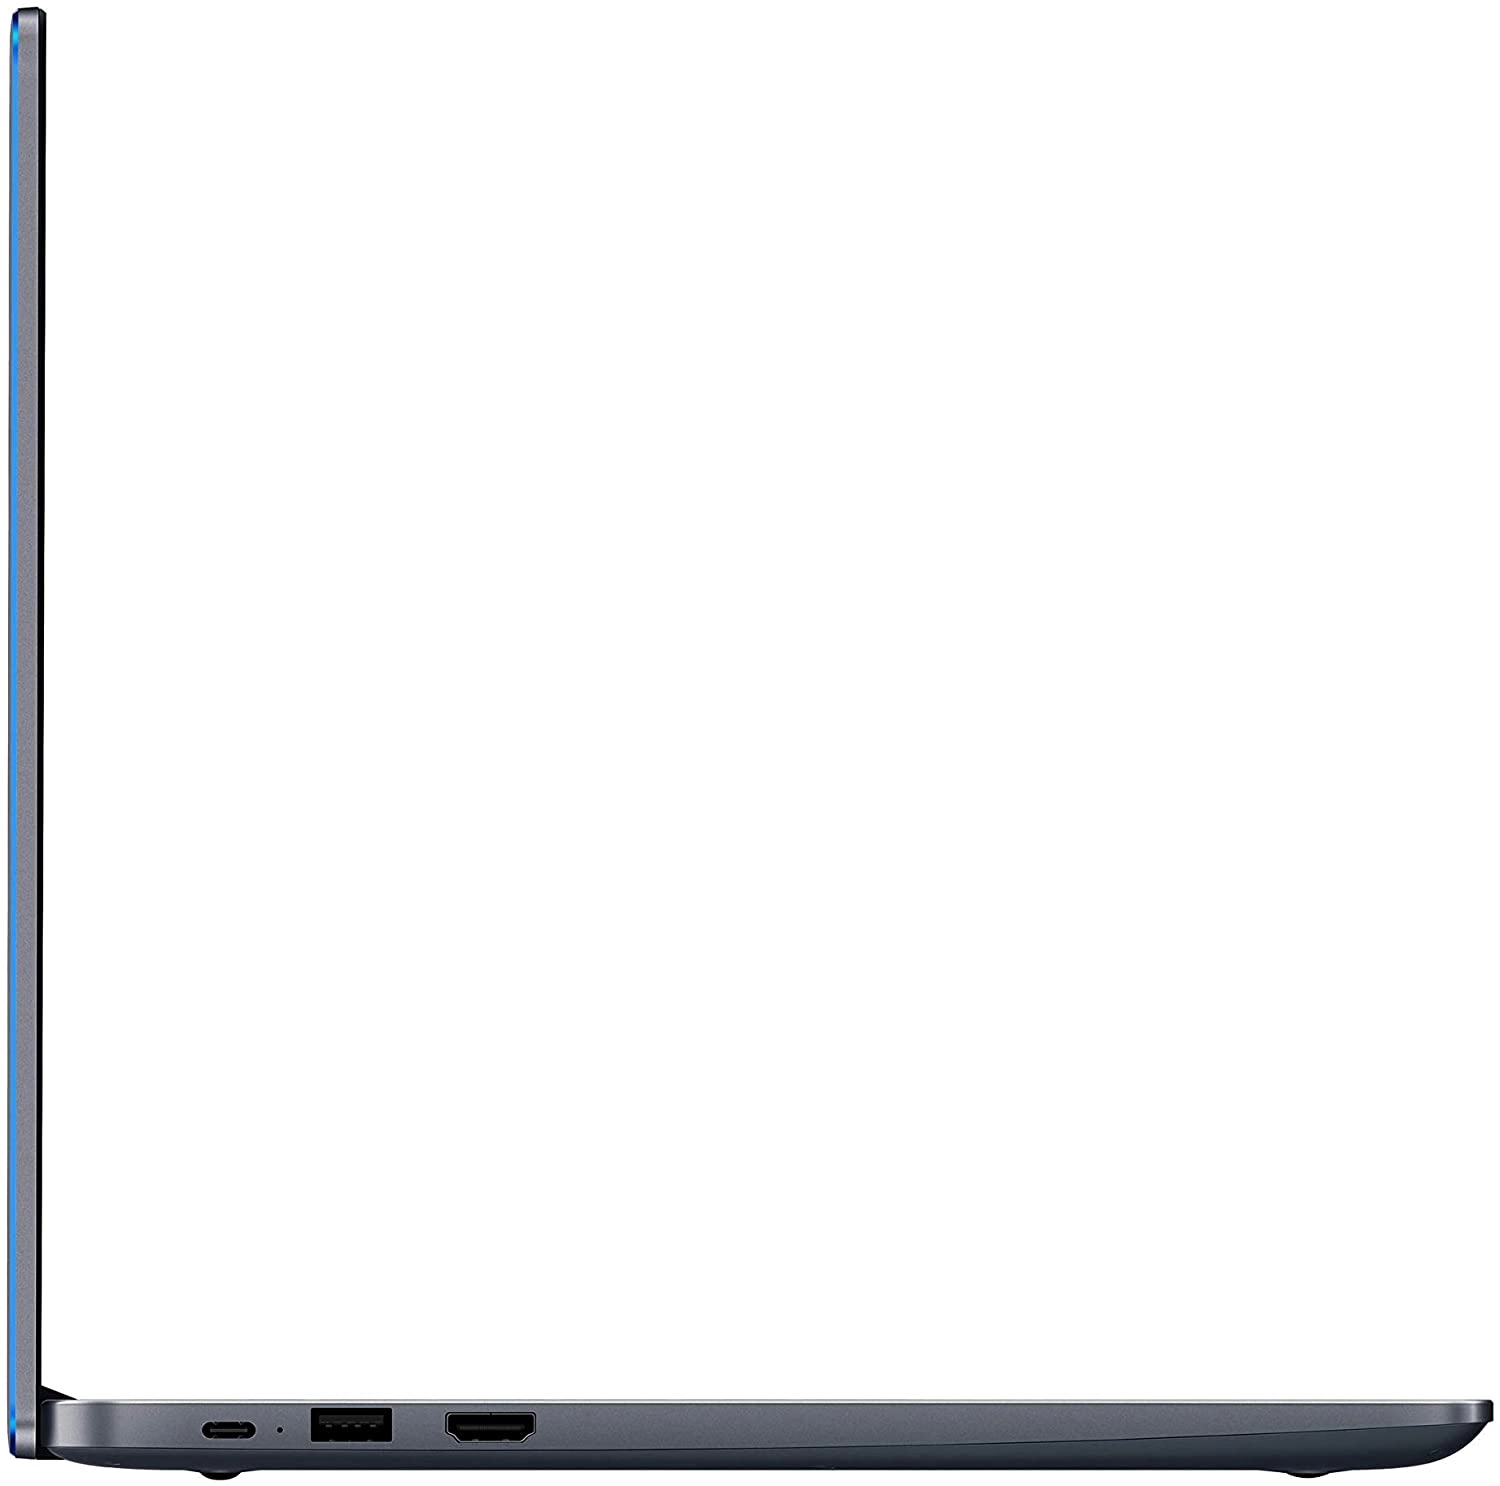 HONOR MagicBook 15 Space Grey 39cm Full HD IPS, Ryzen 5 3500U, 8GB RAM, 256GB SSD laptop image